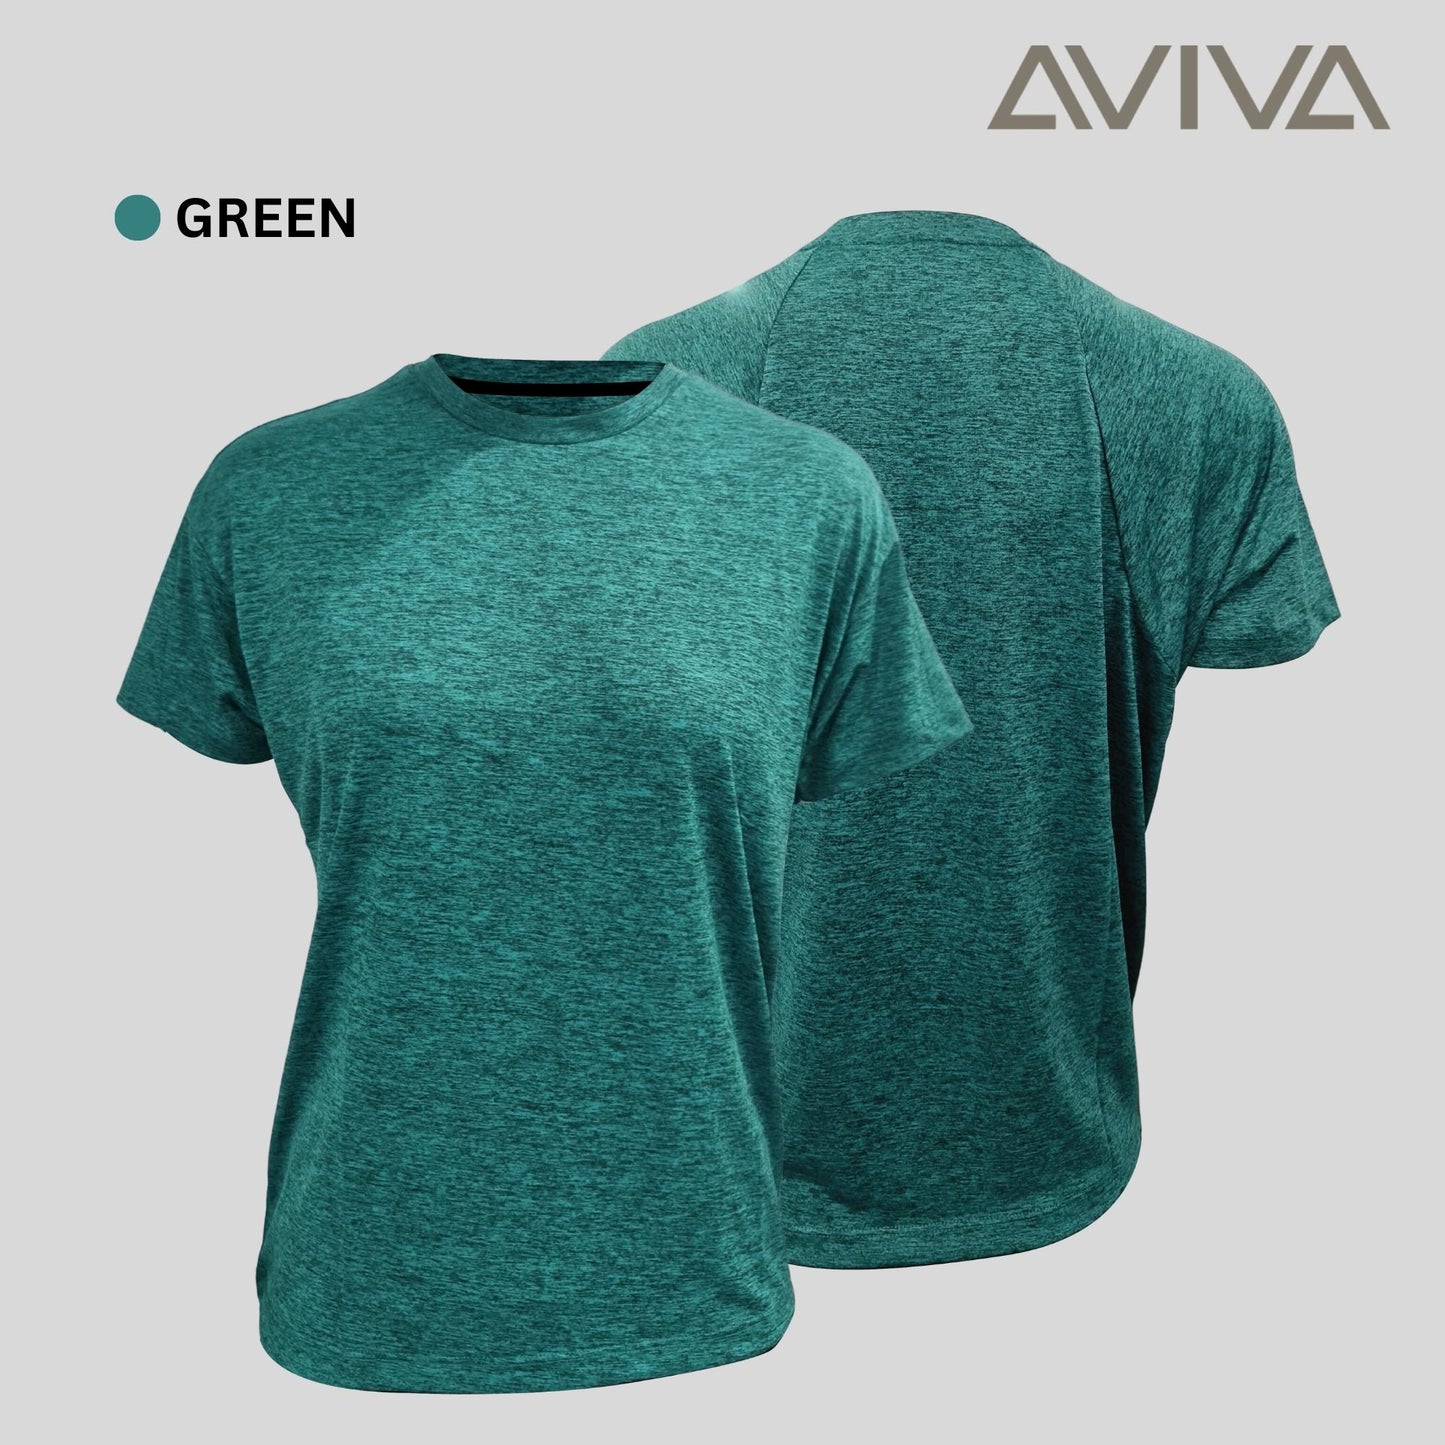 AVIVA Comfortable & Soft Women's Short Sleeve Top (80-8104)